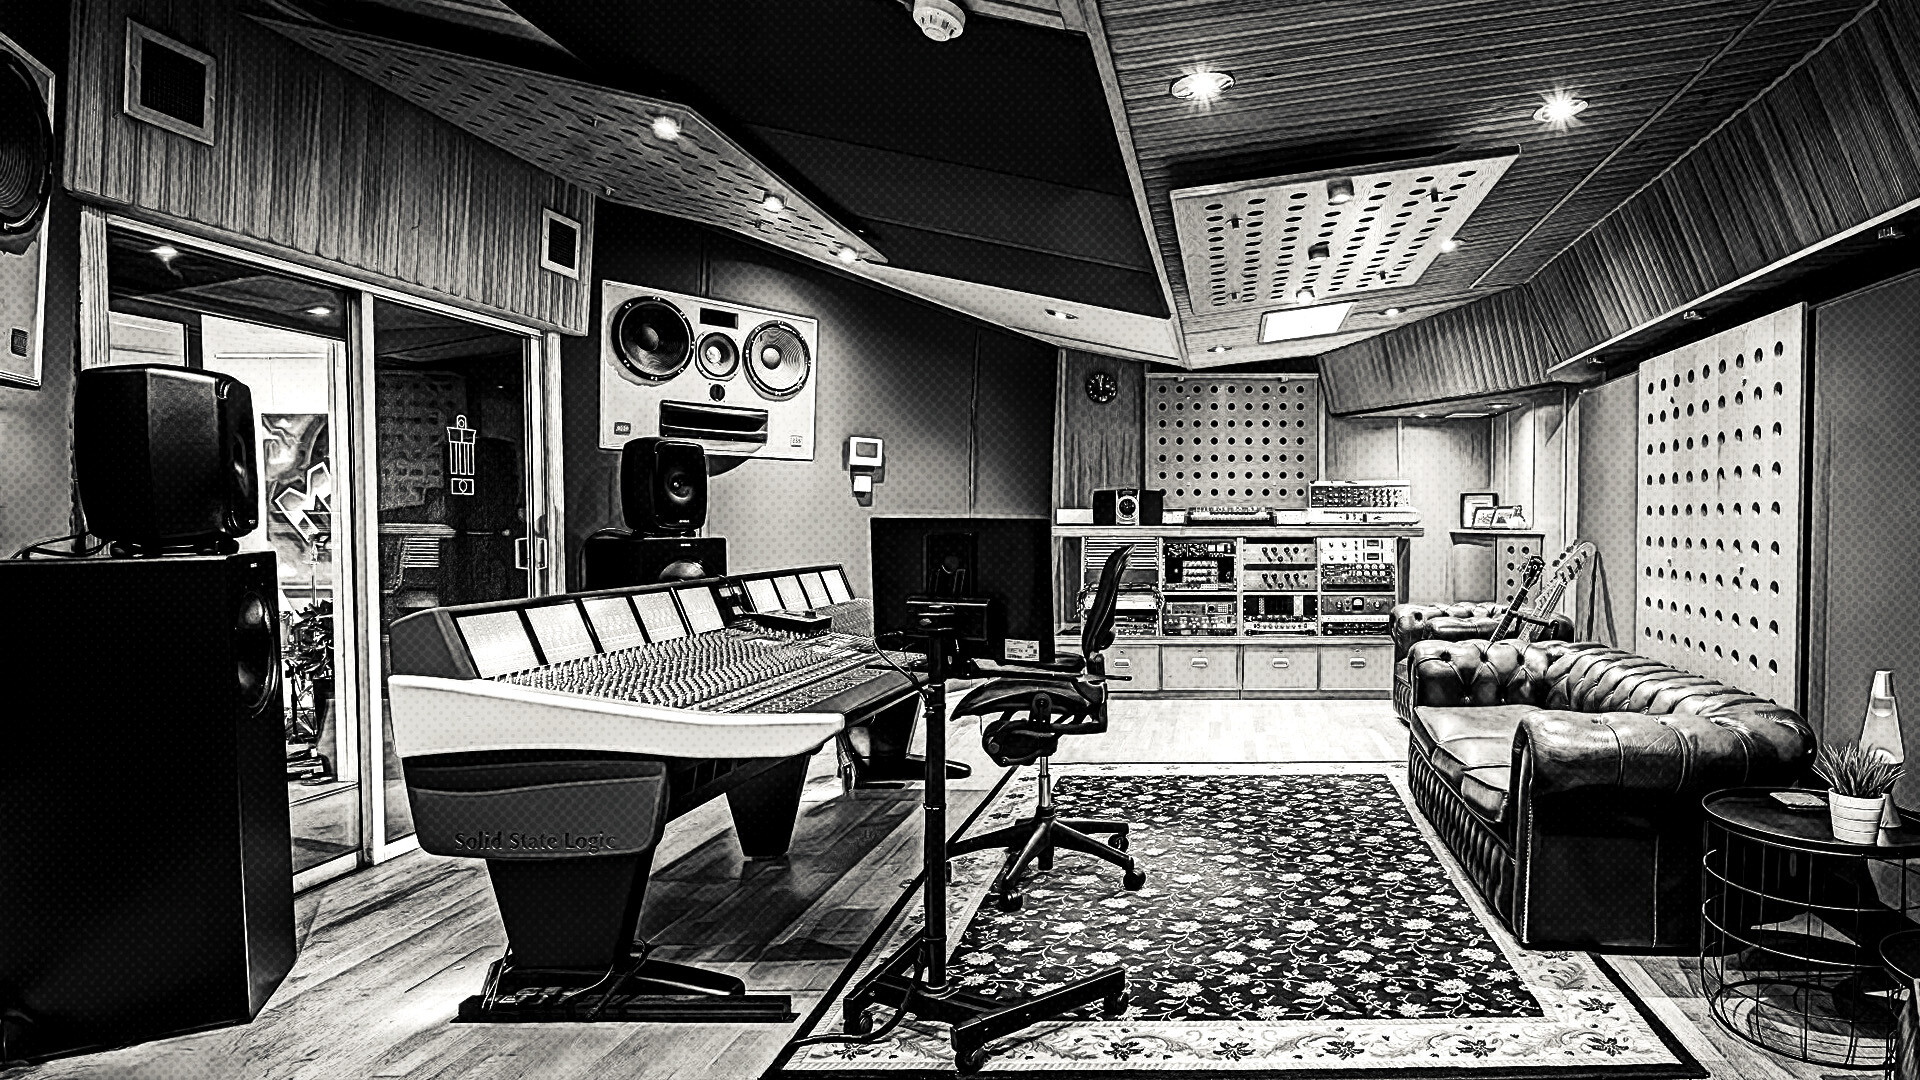 Eminem, Dr. Dre and Snoop Dogg Recording Studio Pic Sparks